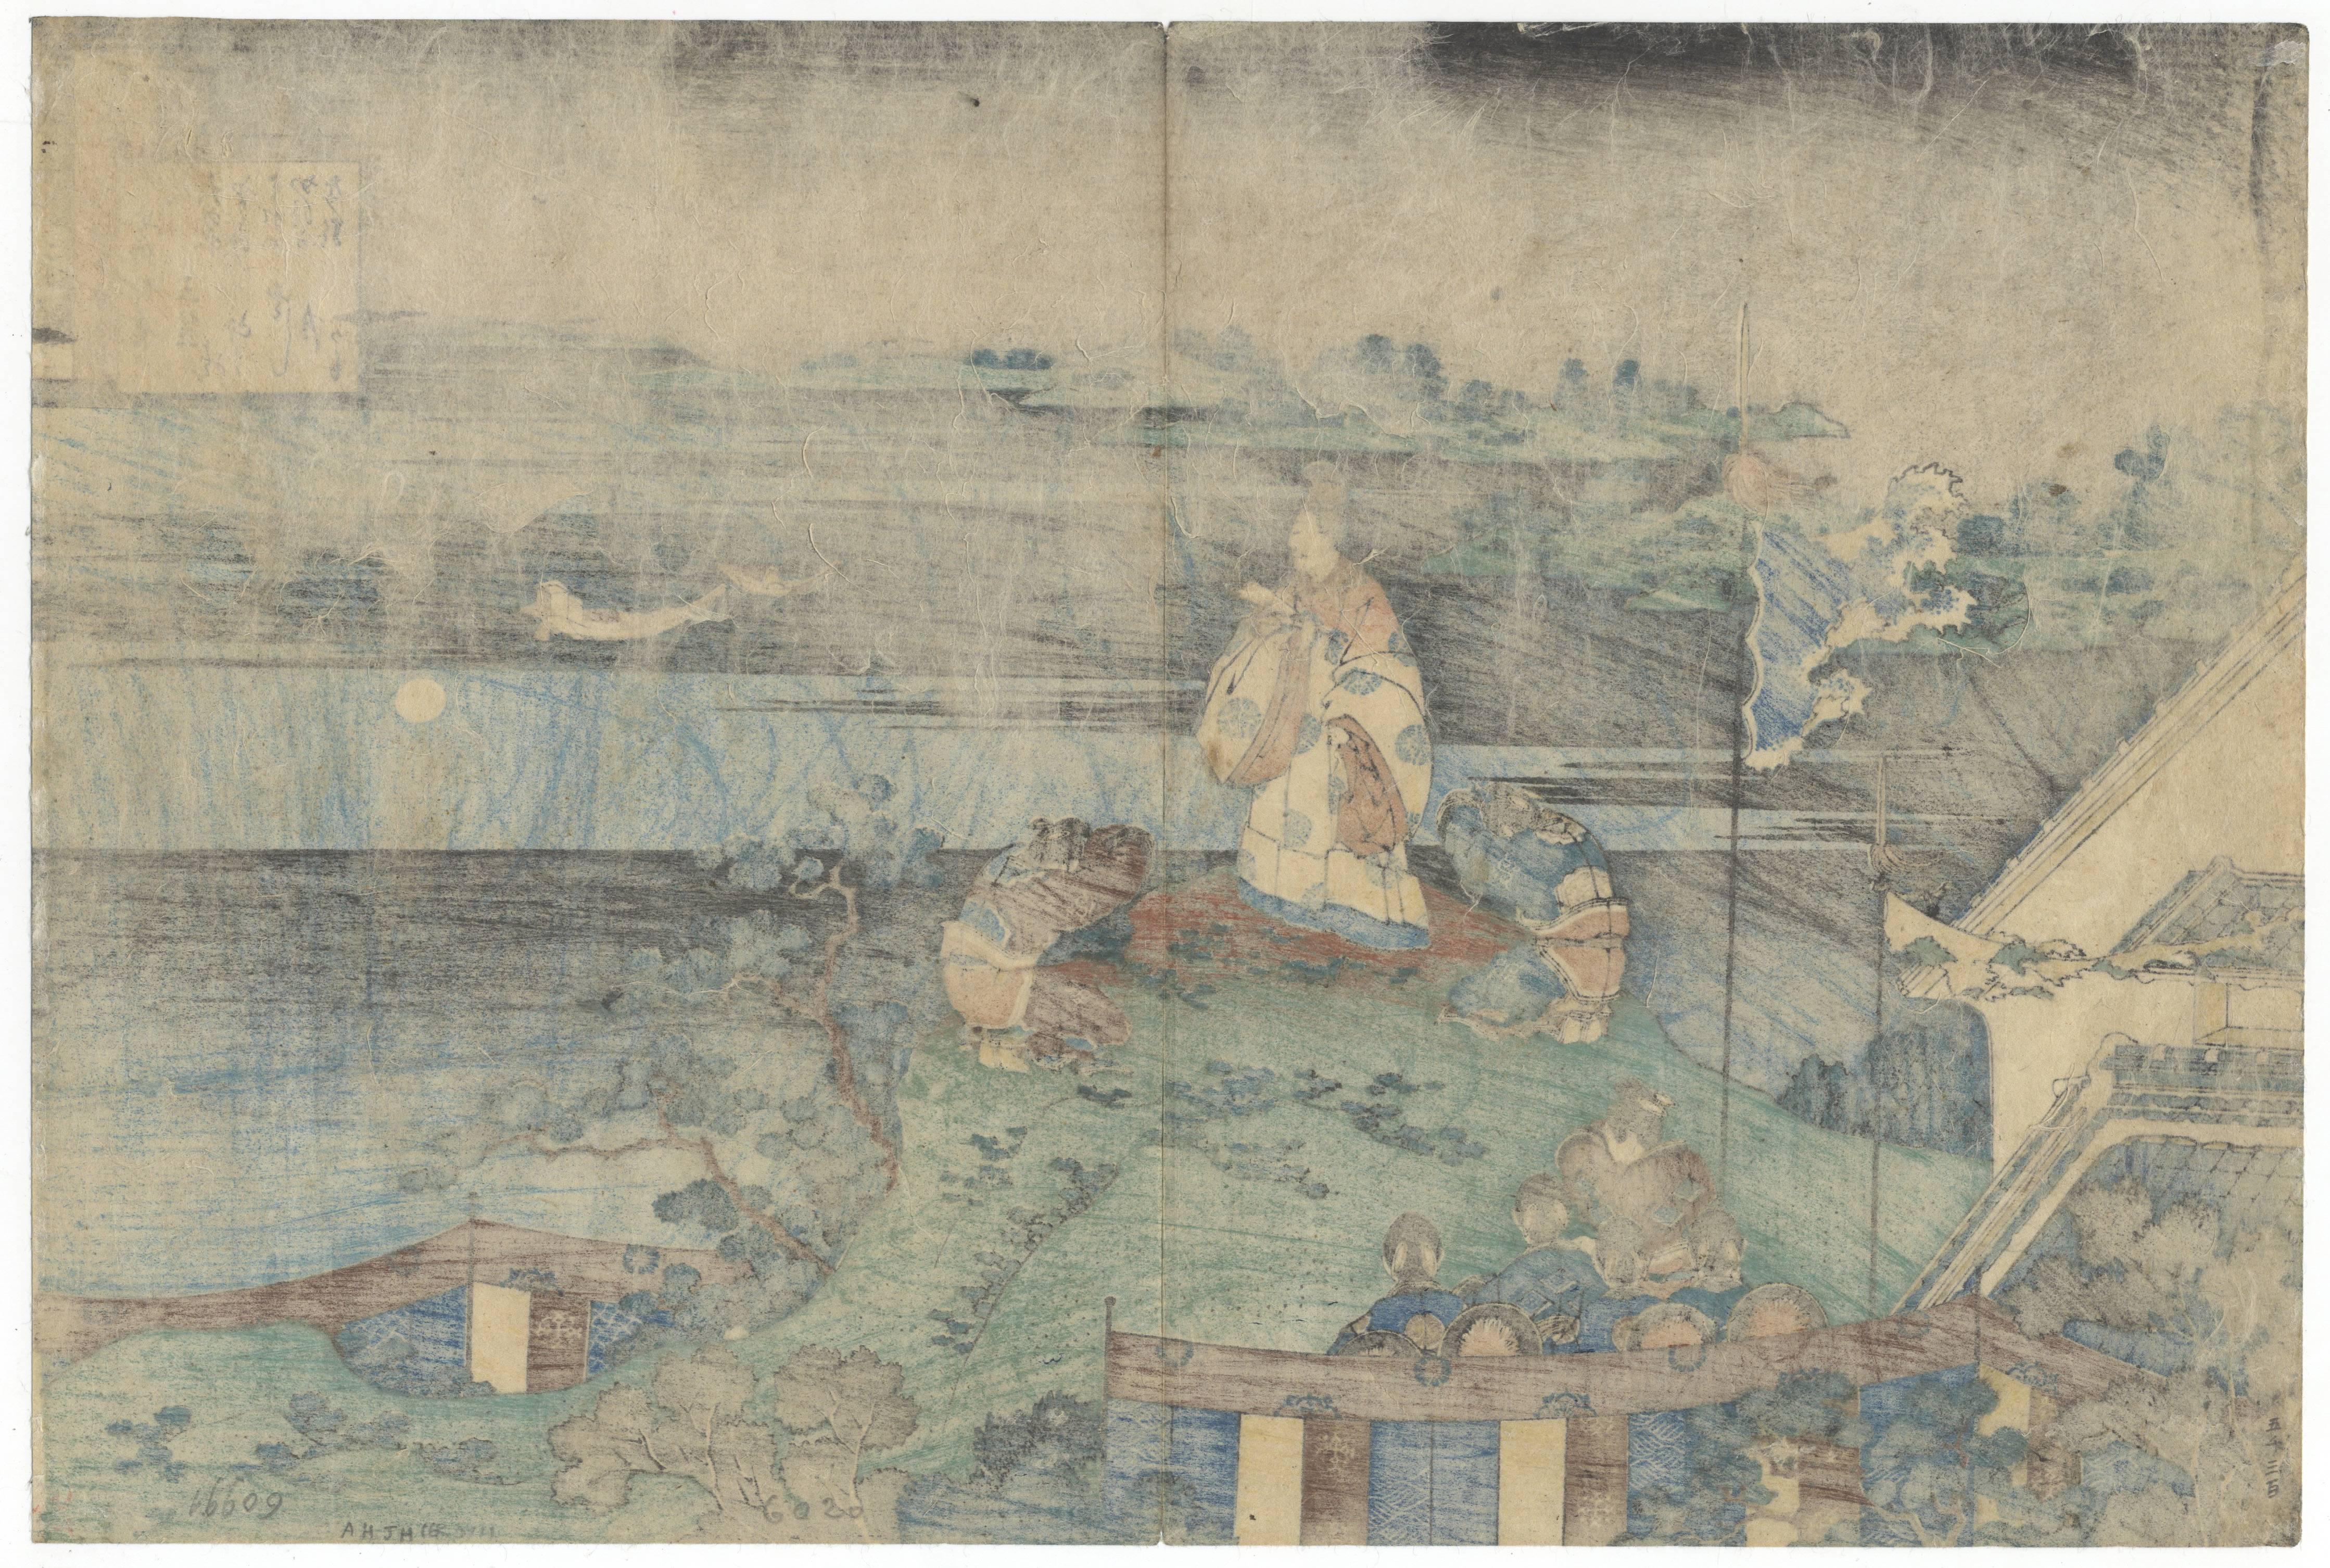 Hand-printed on traditional Japanese washi paper (mulberry tree paper).

Artist: Katsushika Hokusai (1760-1849)
Title: A Poem by Abe no Nakamaro
Series: 100 Poems Narrated by the Nurse
Publisher: Nishimuraya Yohachi
Date: 1835-1845
Size: 36.8